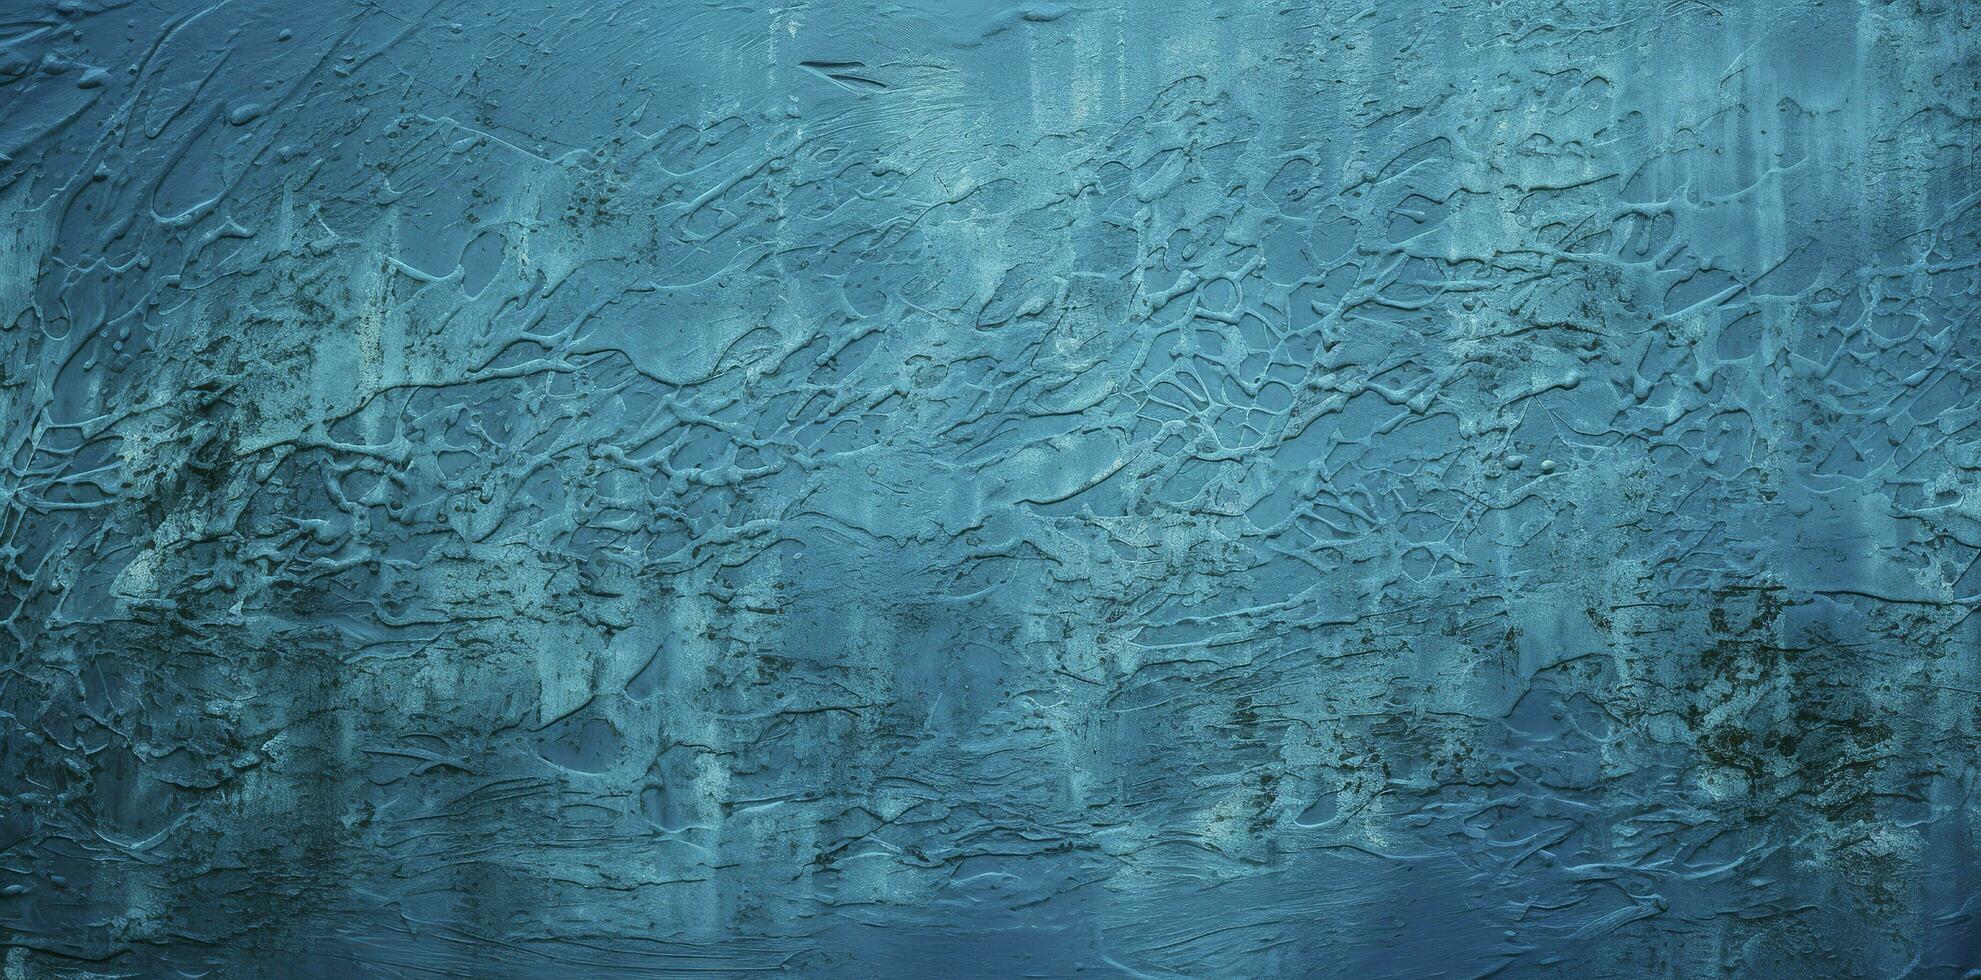 realistic ice texture illustration, generate ai photo